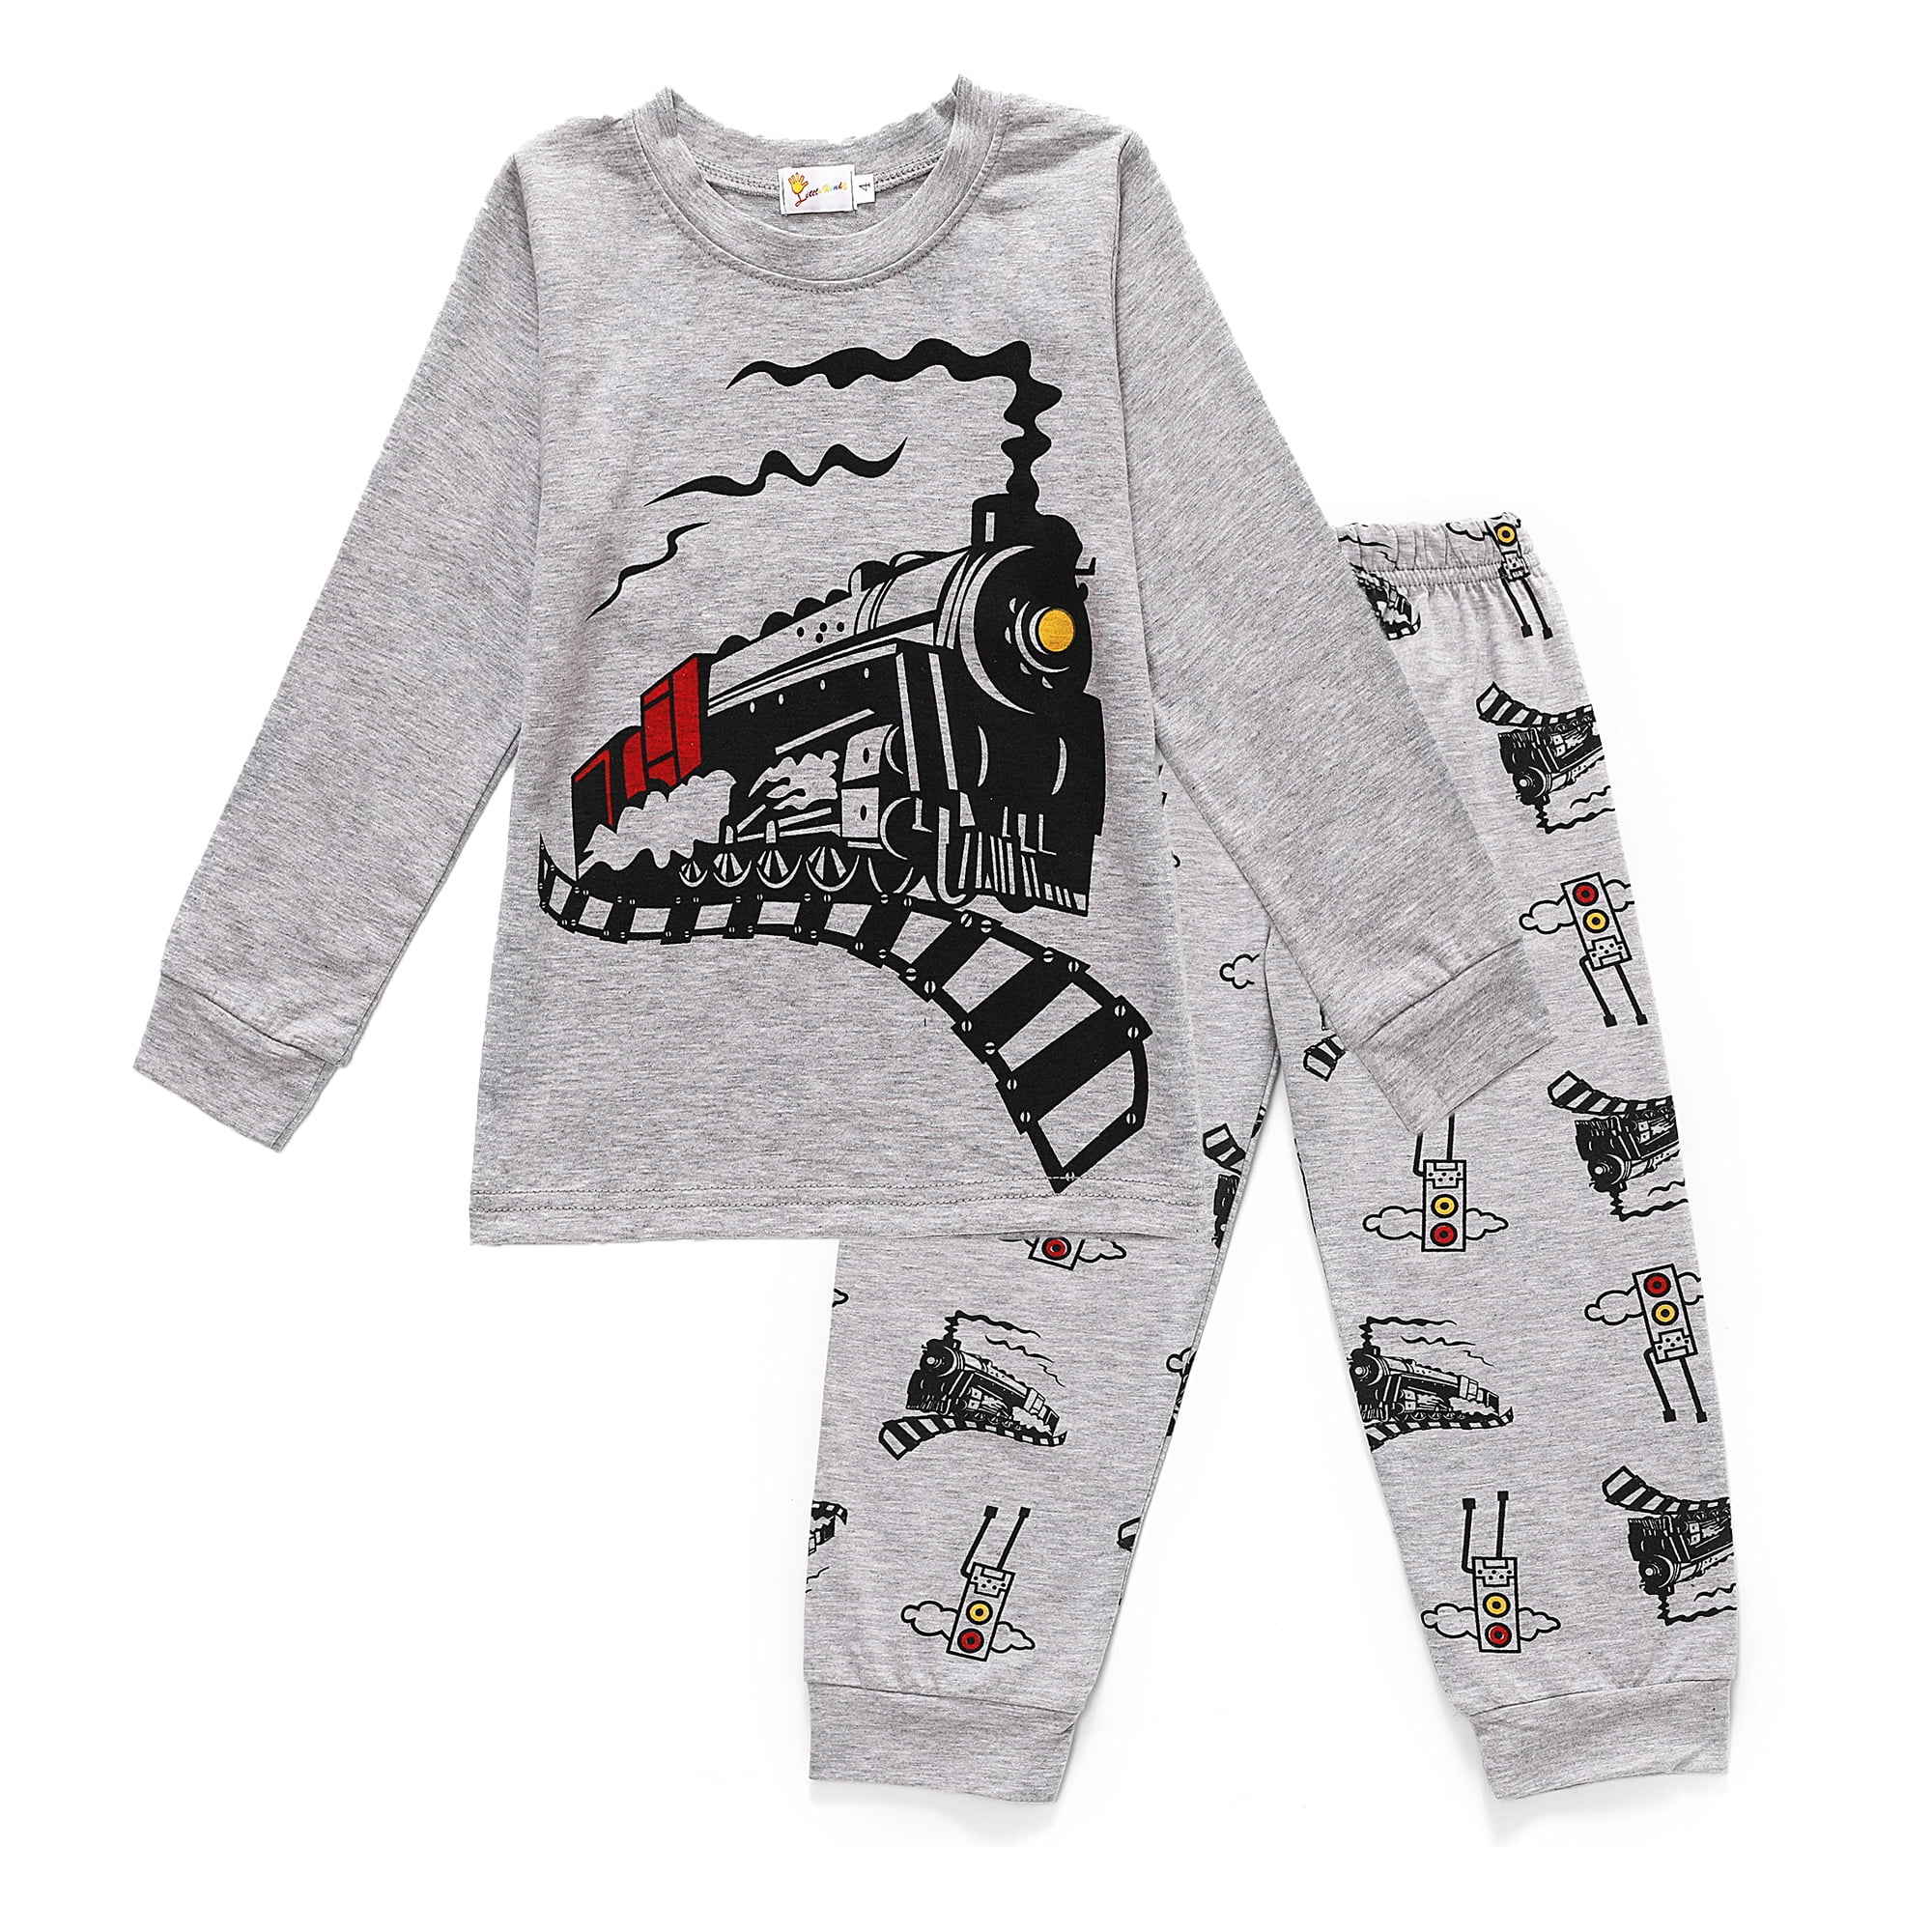 Toddler Boys Pajamas Dinosaur 100/% Cotton Kids Train 2 Piece Pjs Sets Sleepwear Clothes Set 1-7 T